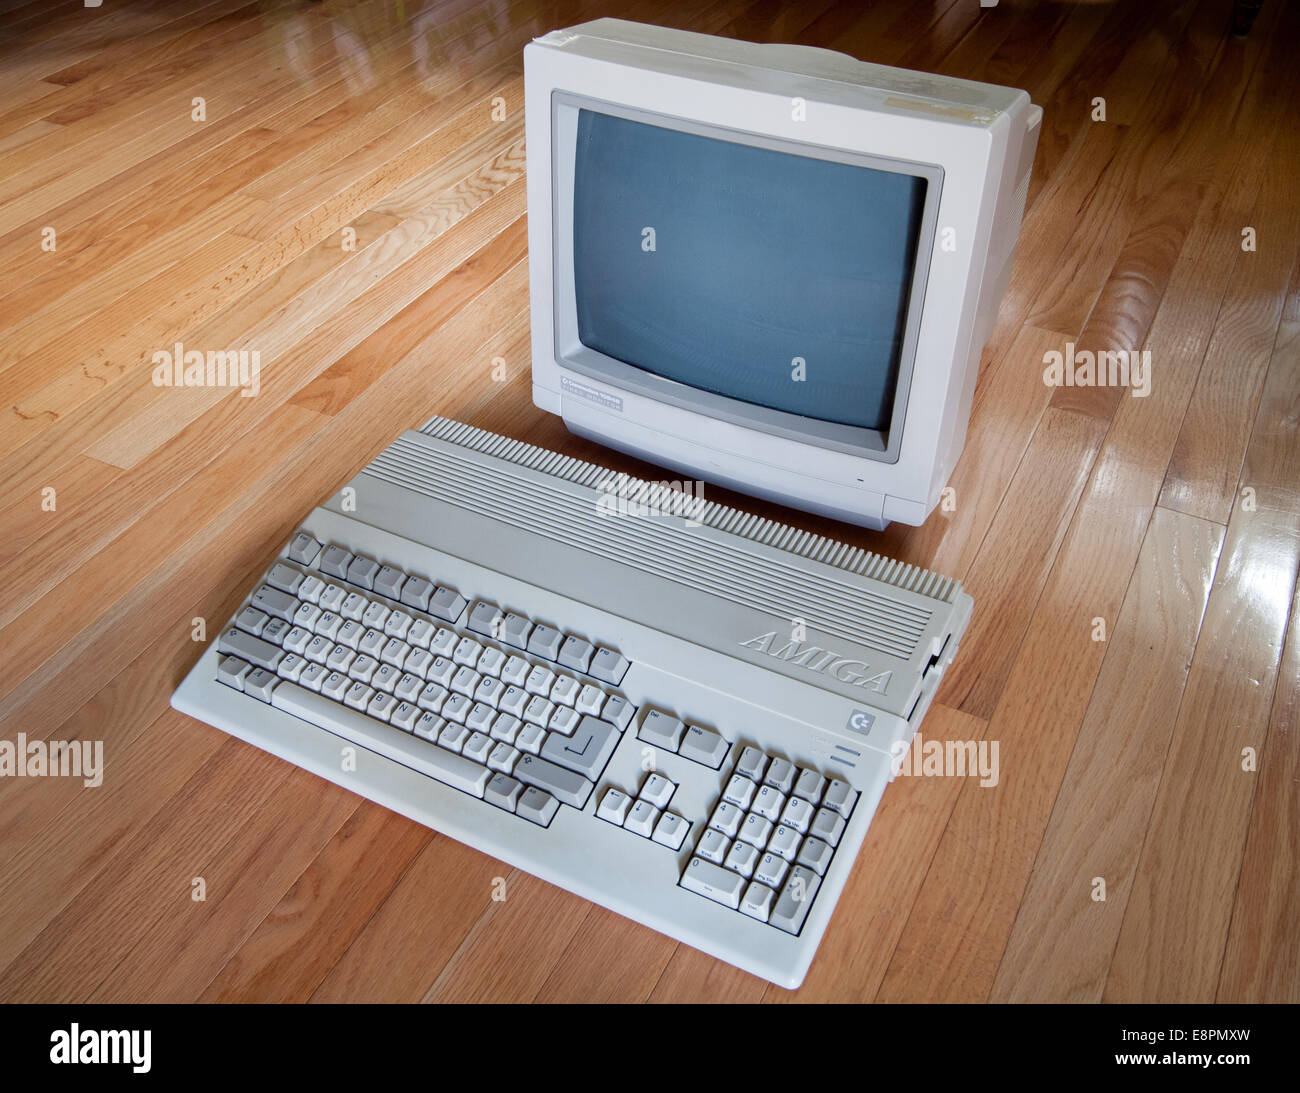 A view of a Commodore Amiga 500 computer and a Commodore 1084S computer monitor. Stock Photo